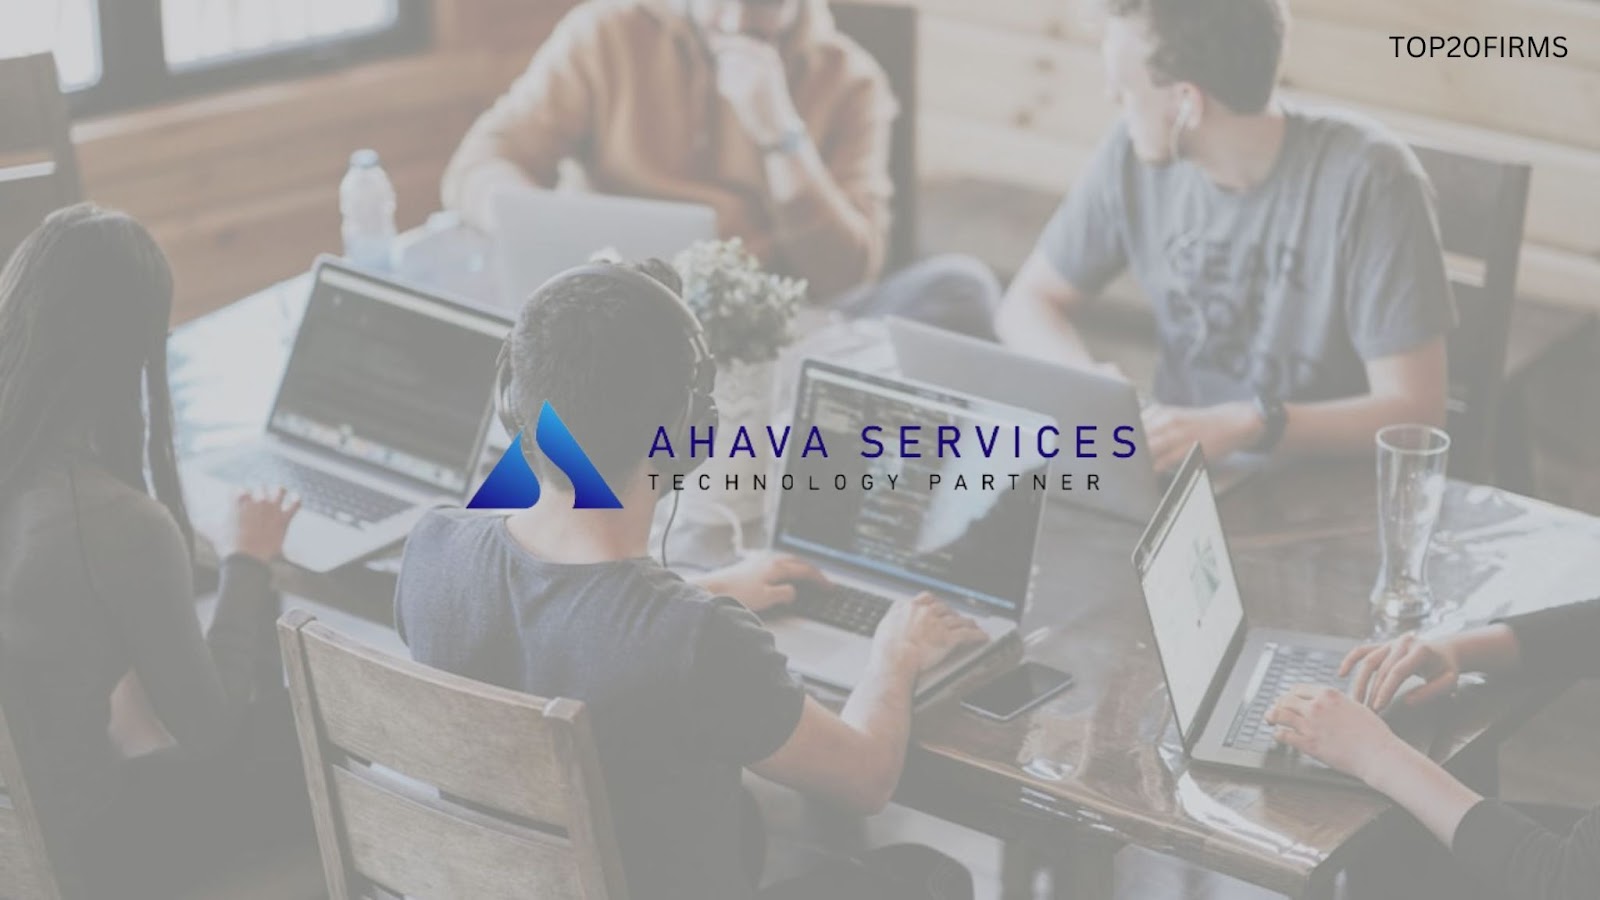 AHAVA Services Technology Partner